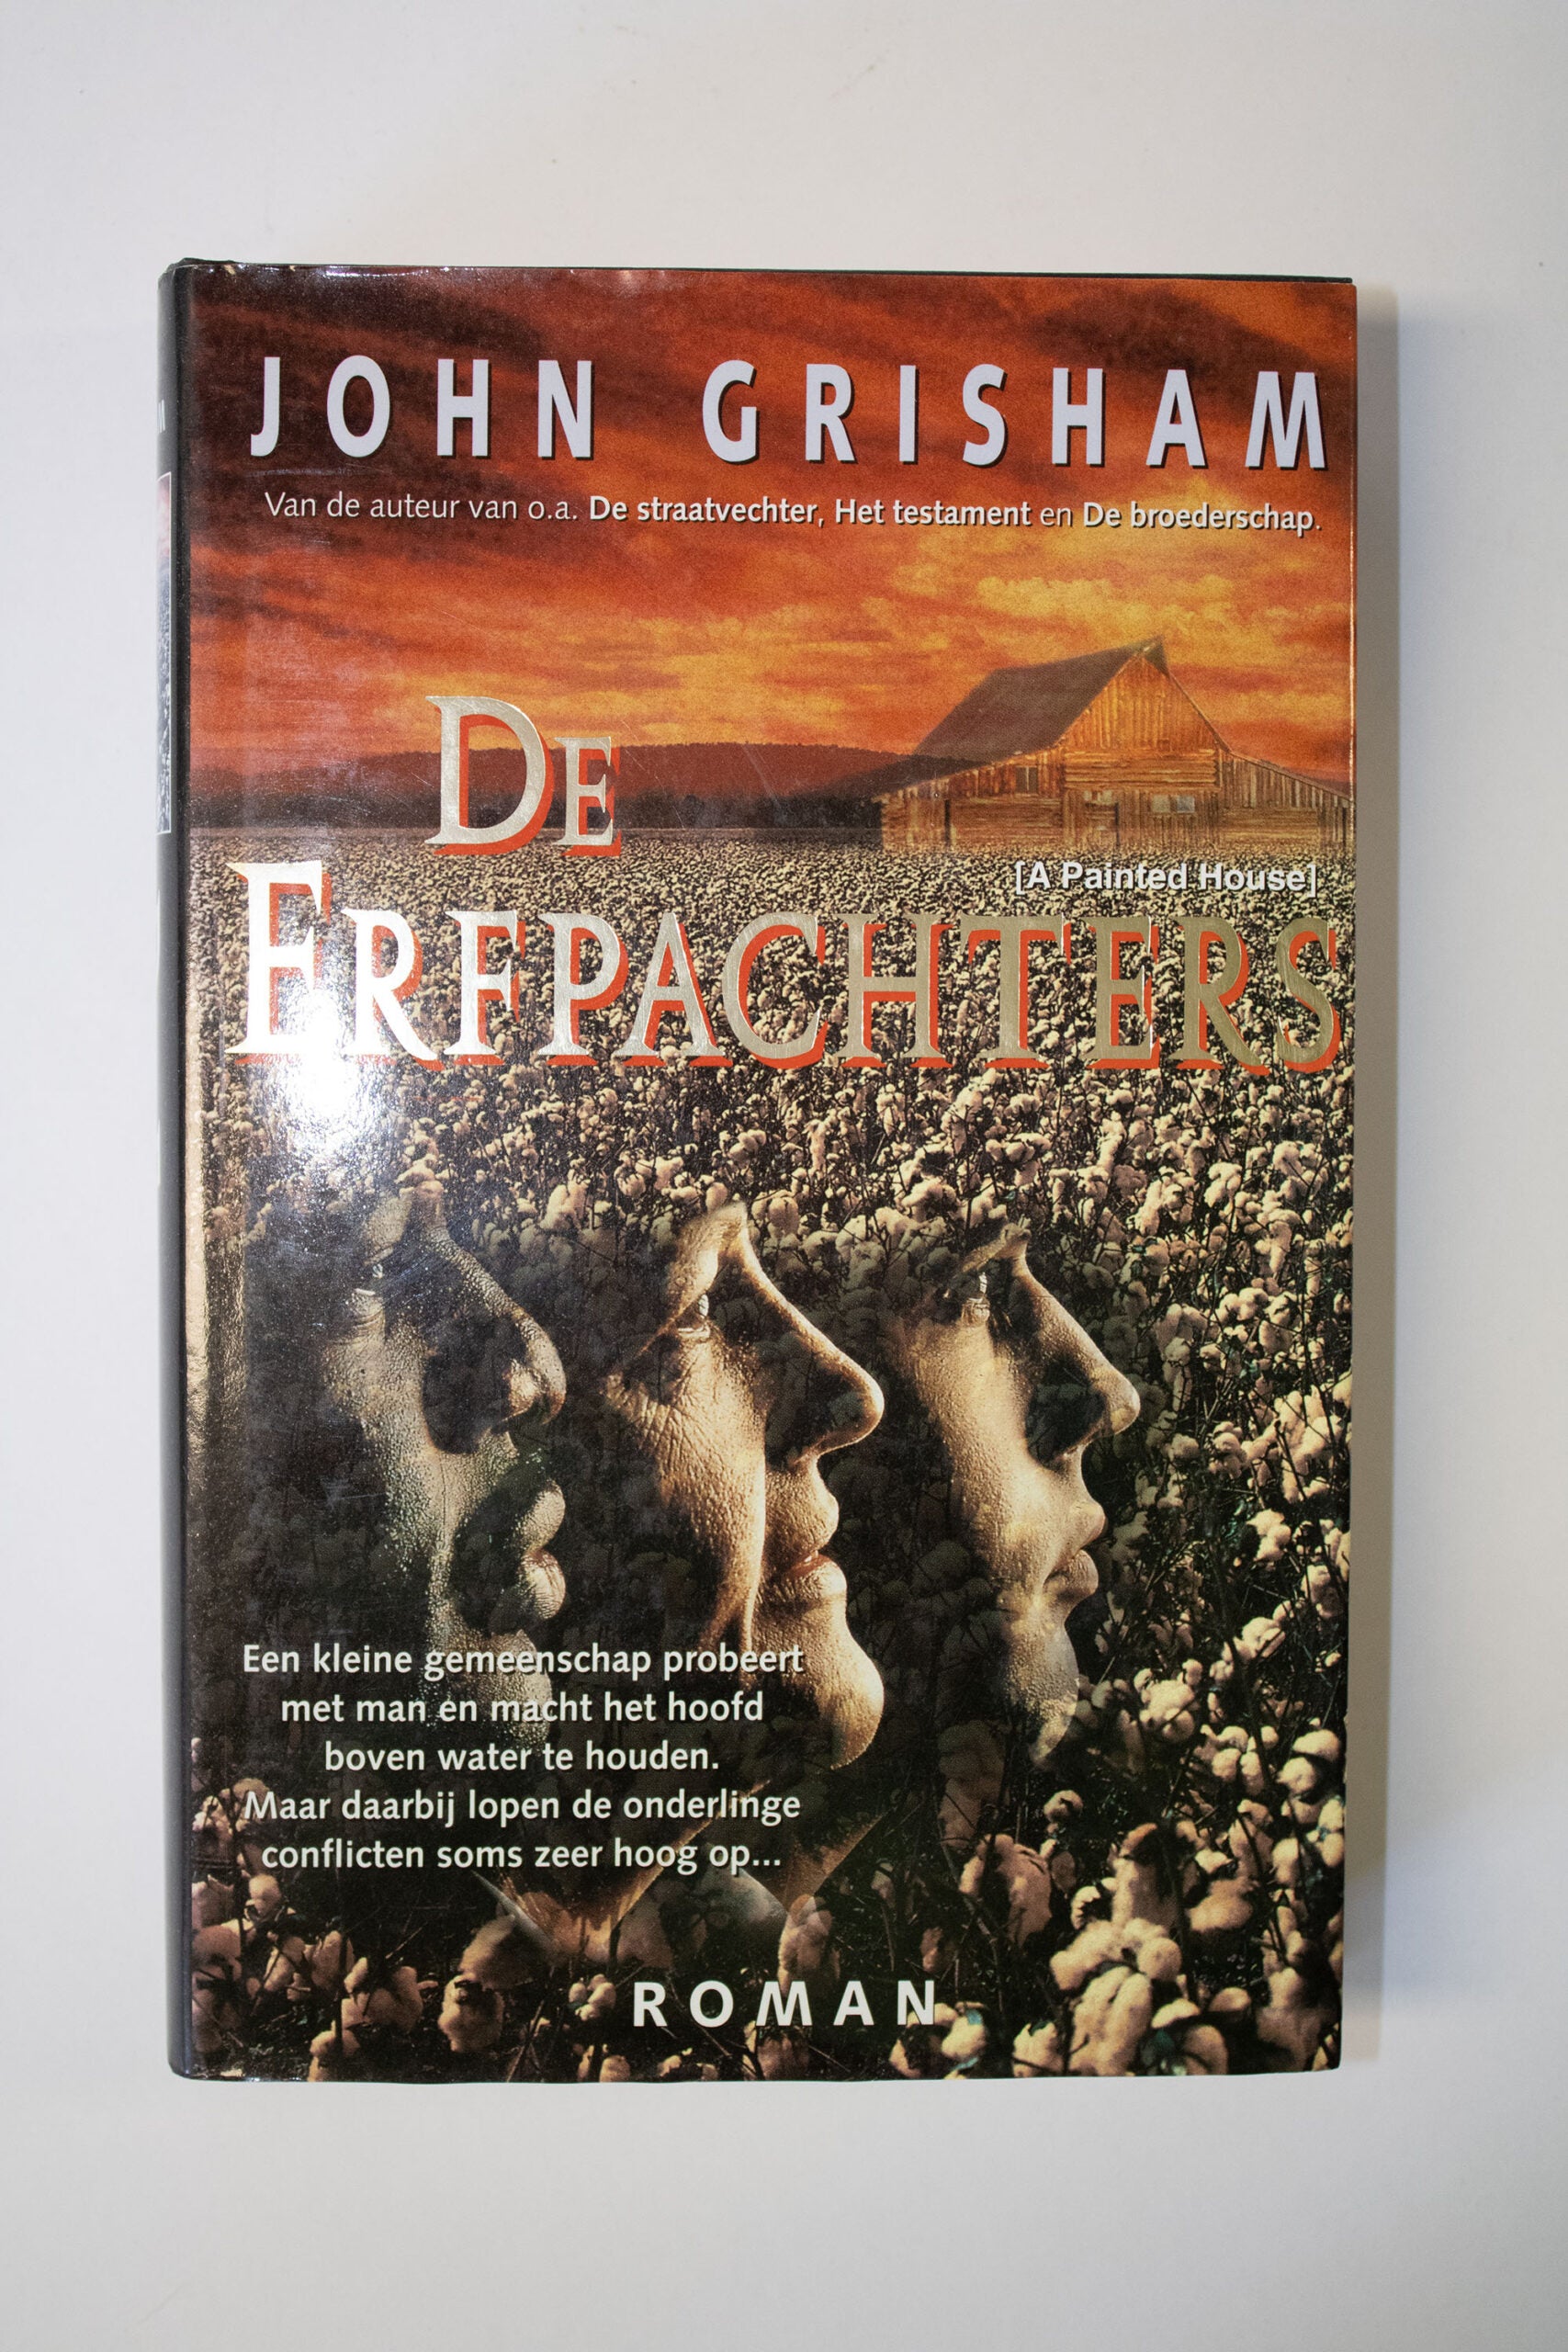 De erfpachters- John Grisham